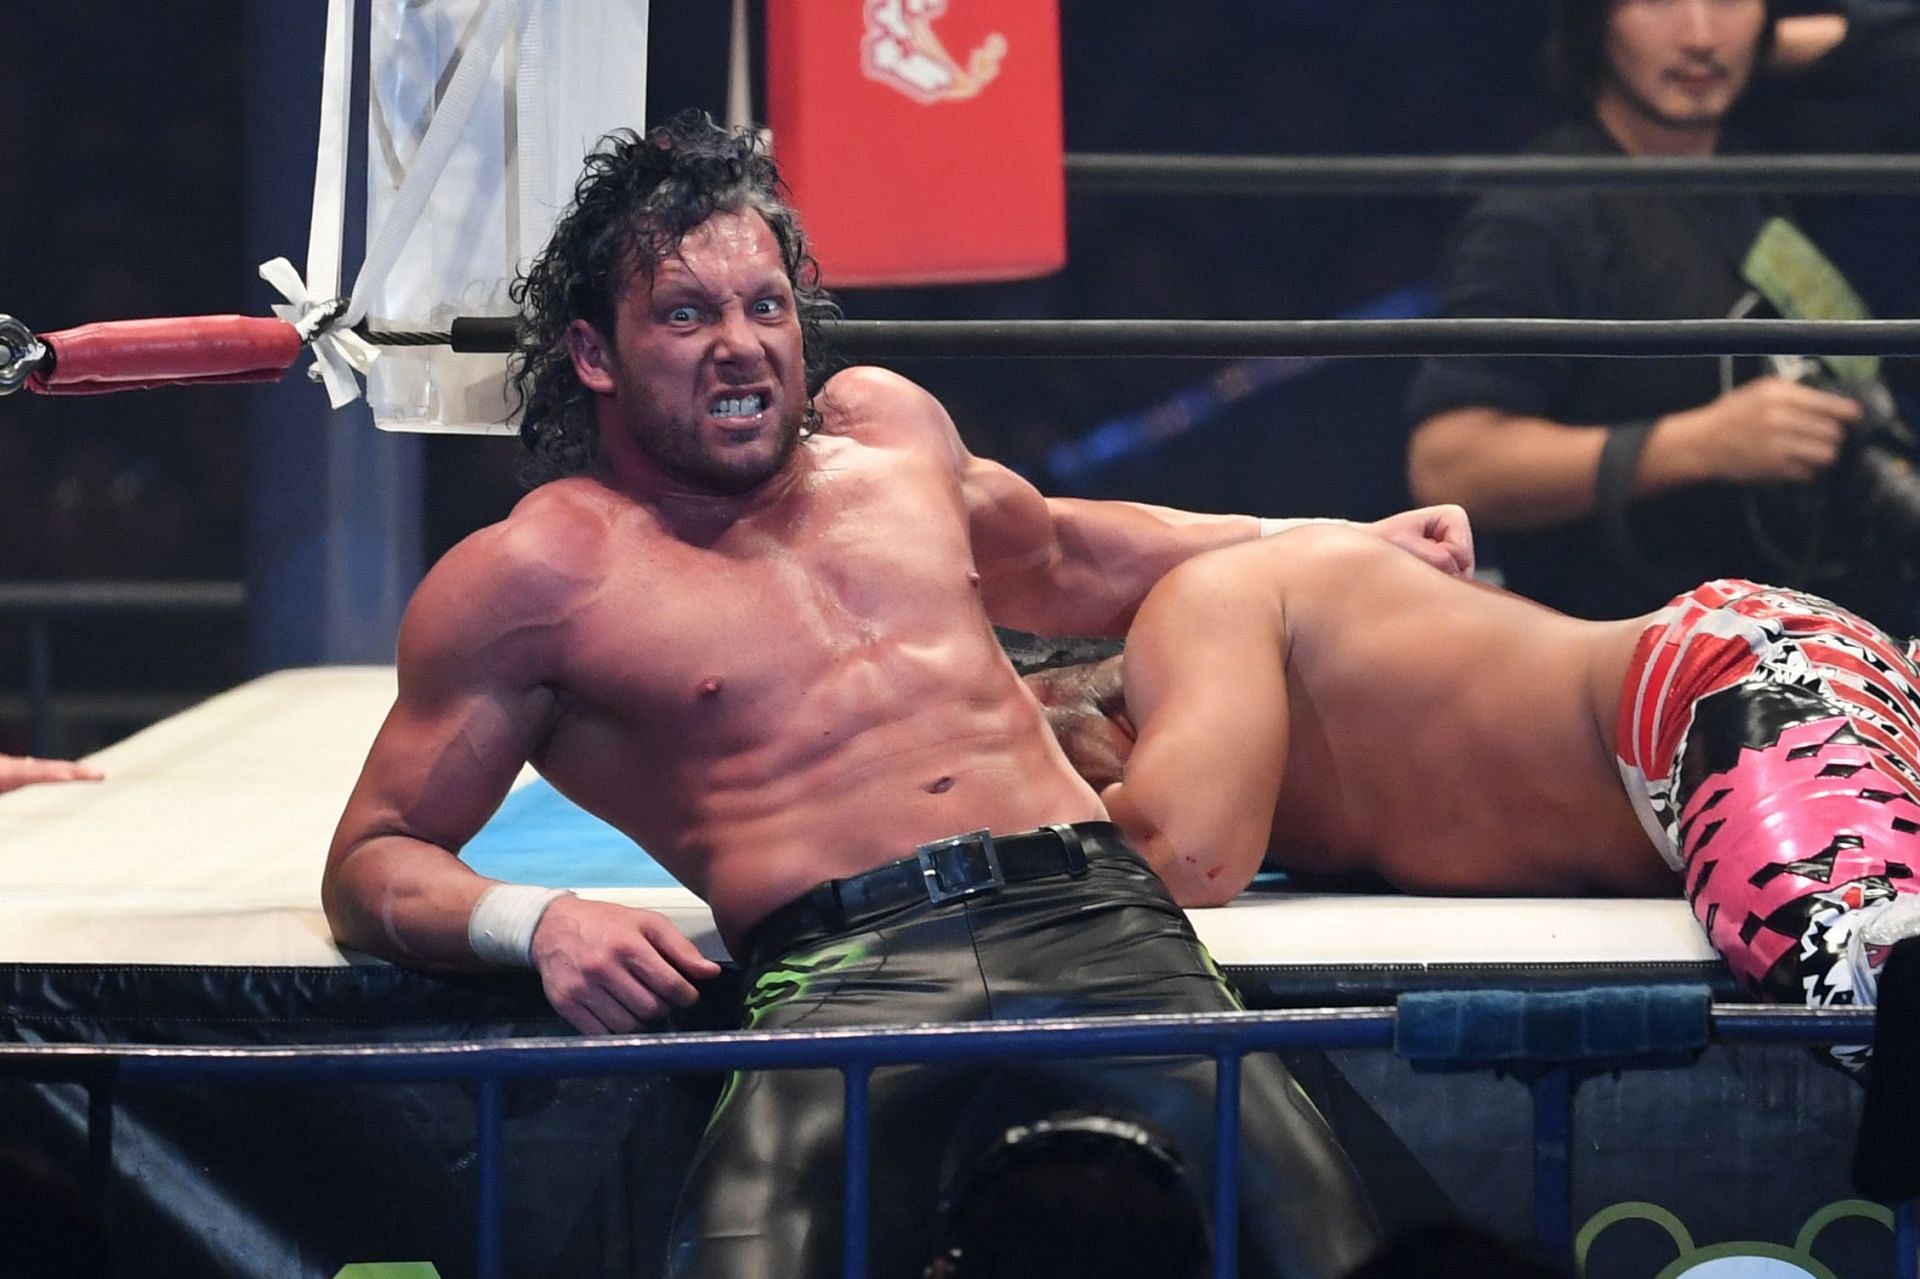 Kenny Omega is a former IWGP Heavyweight Champion in NJPW